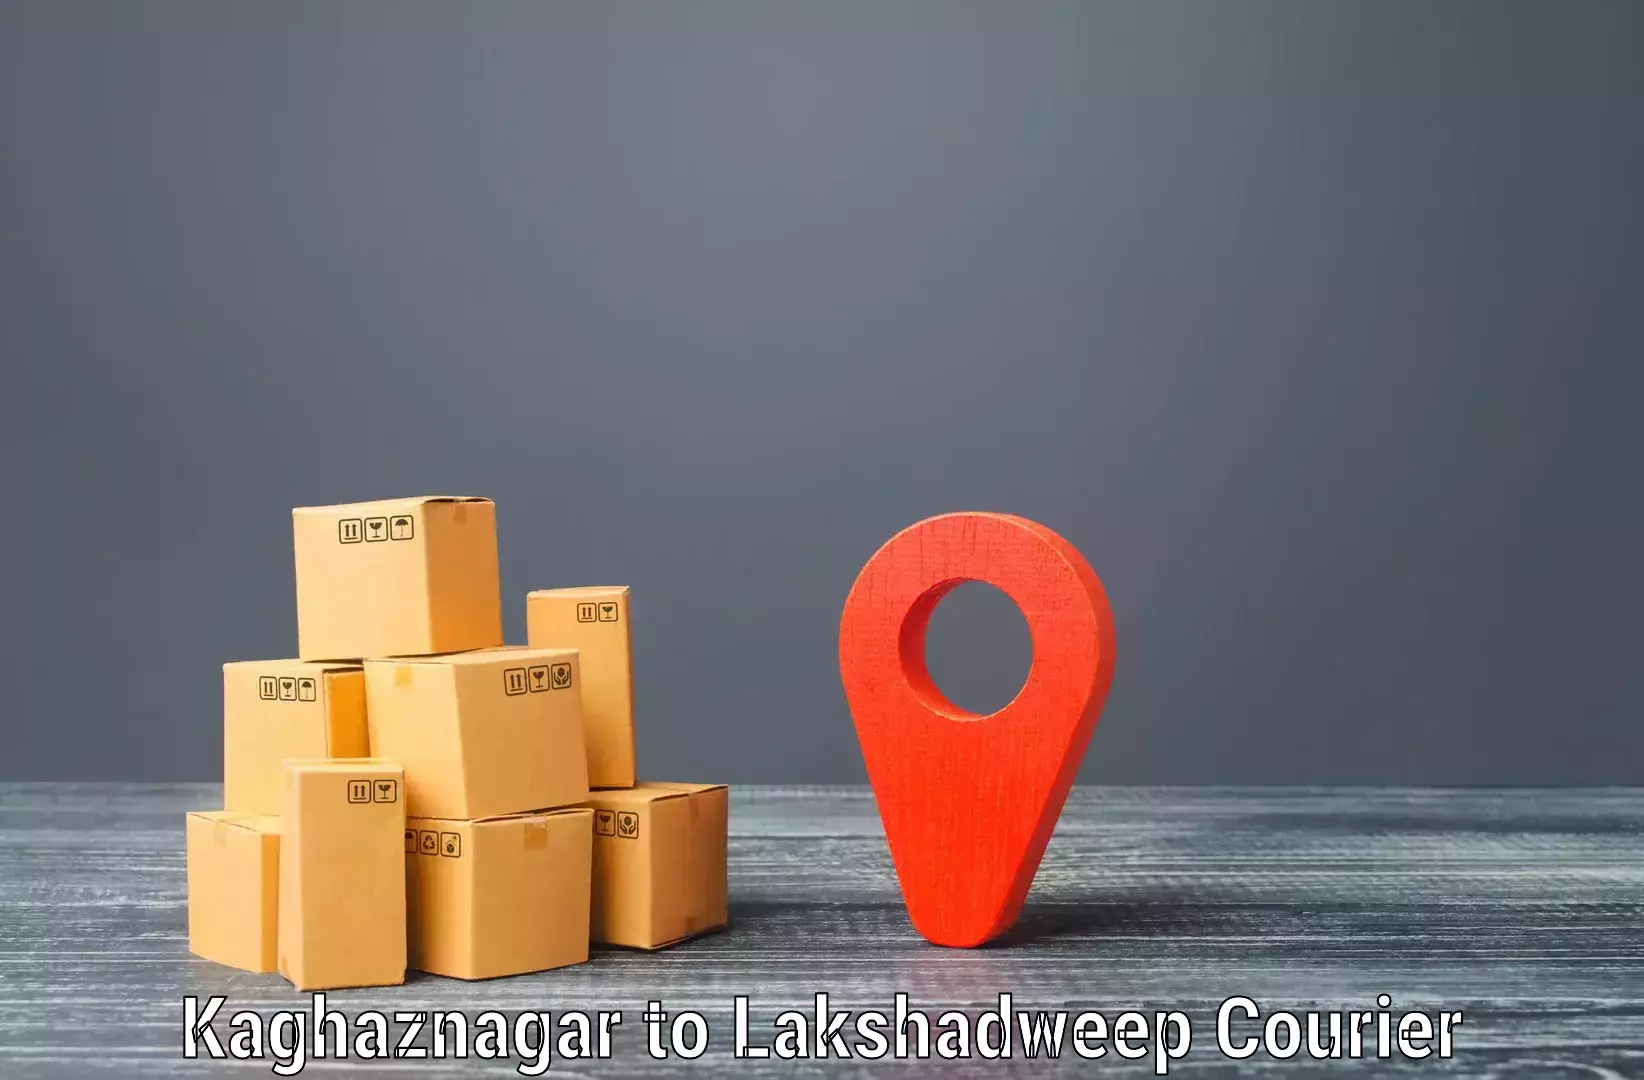 International courier networks Kaghaznagar to Lakshadweep